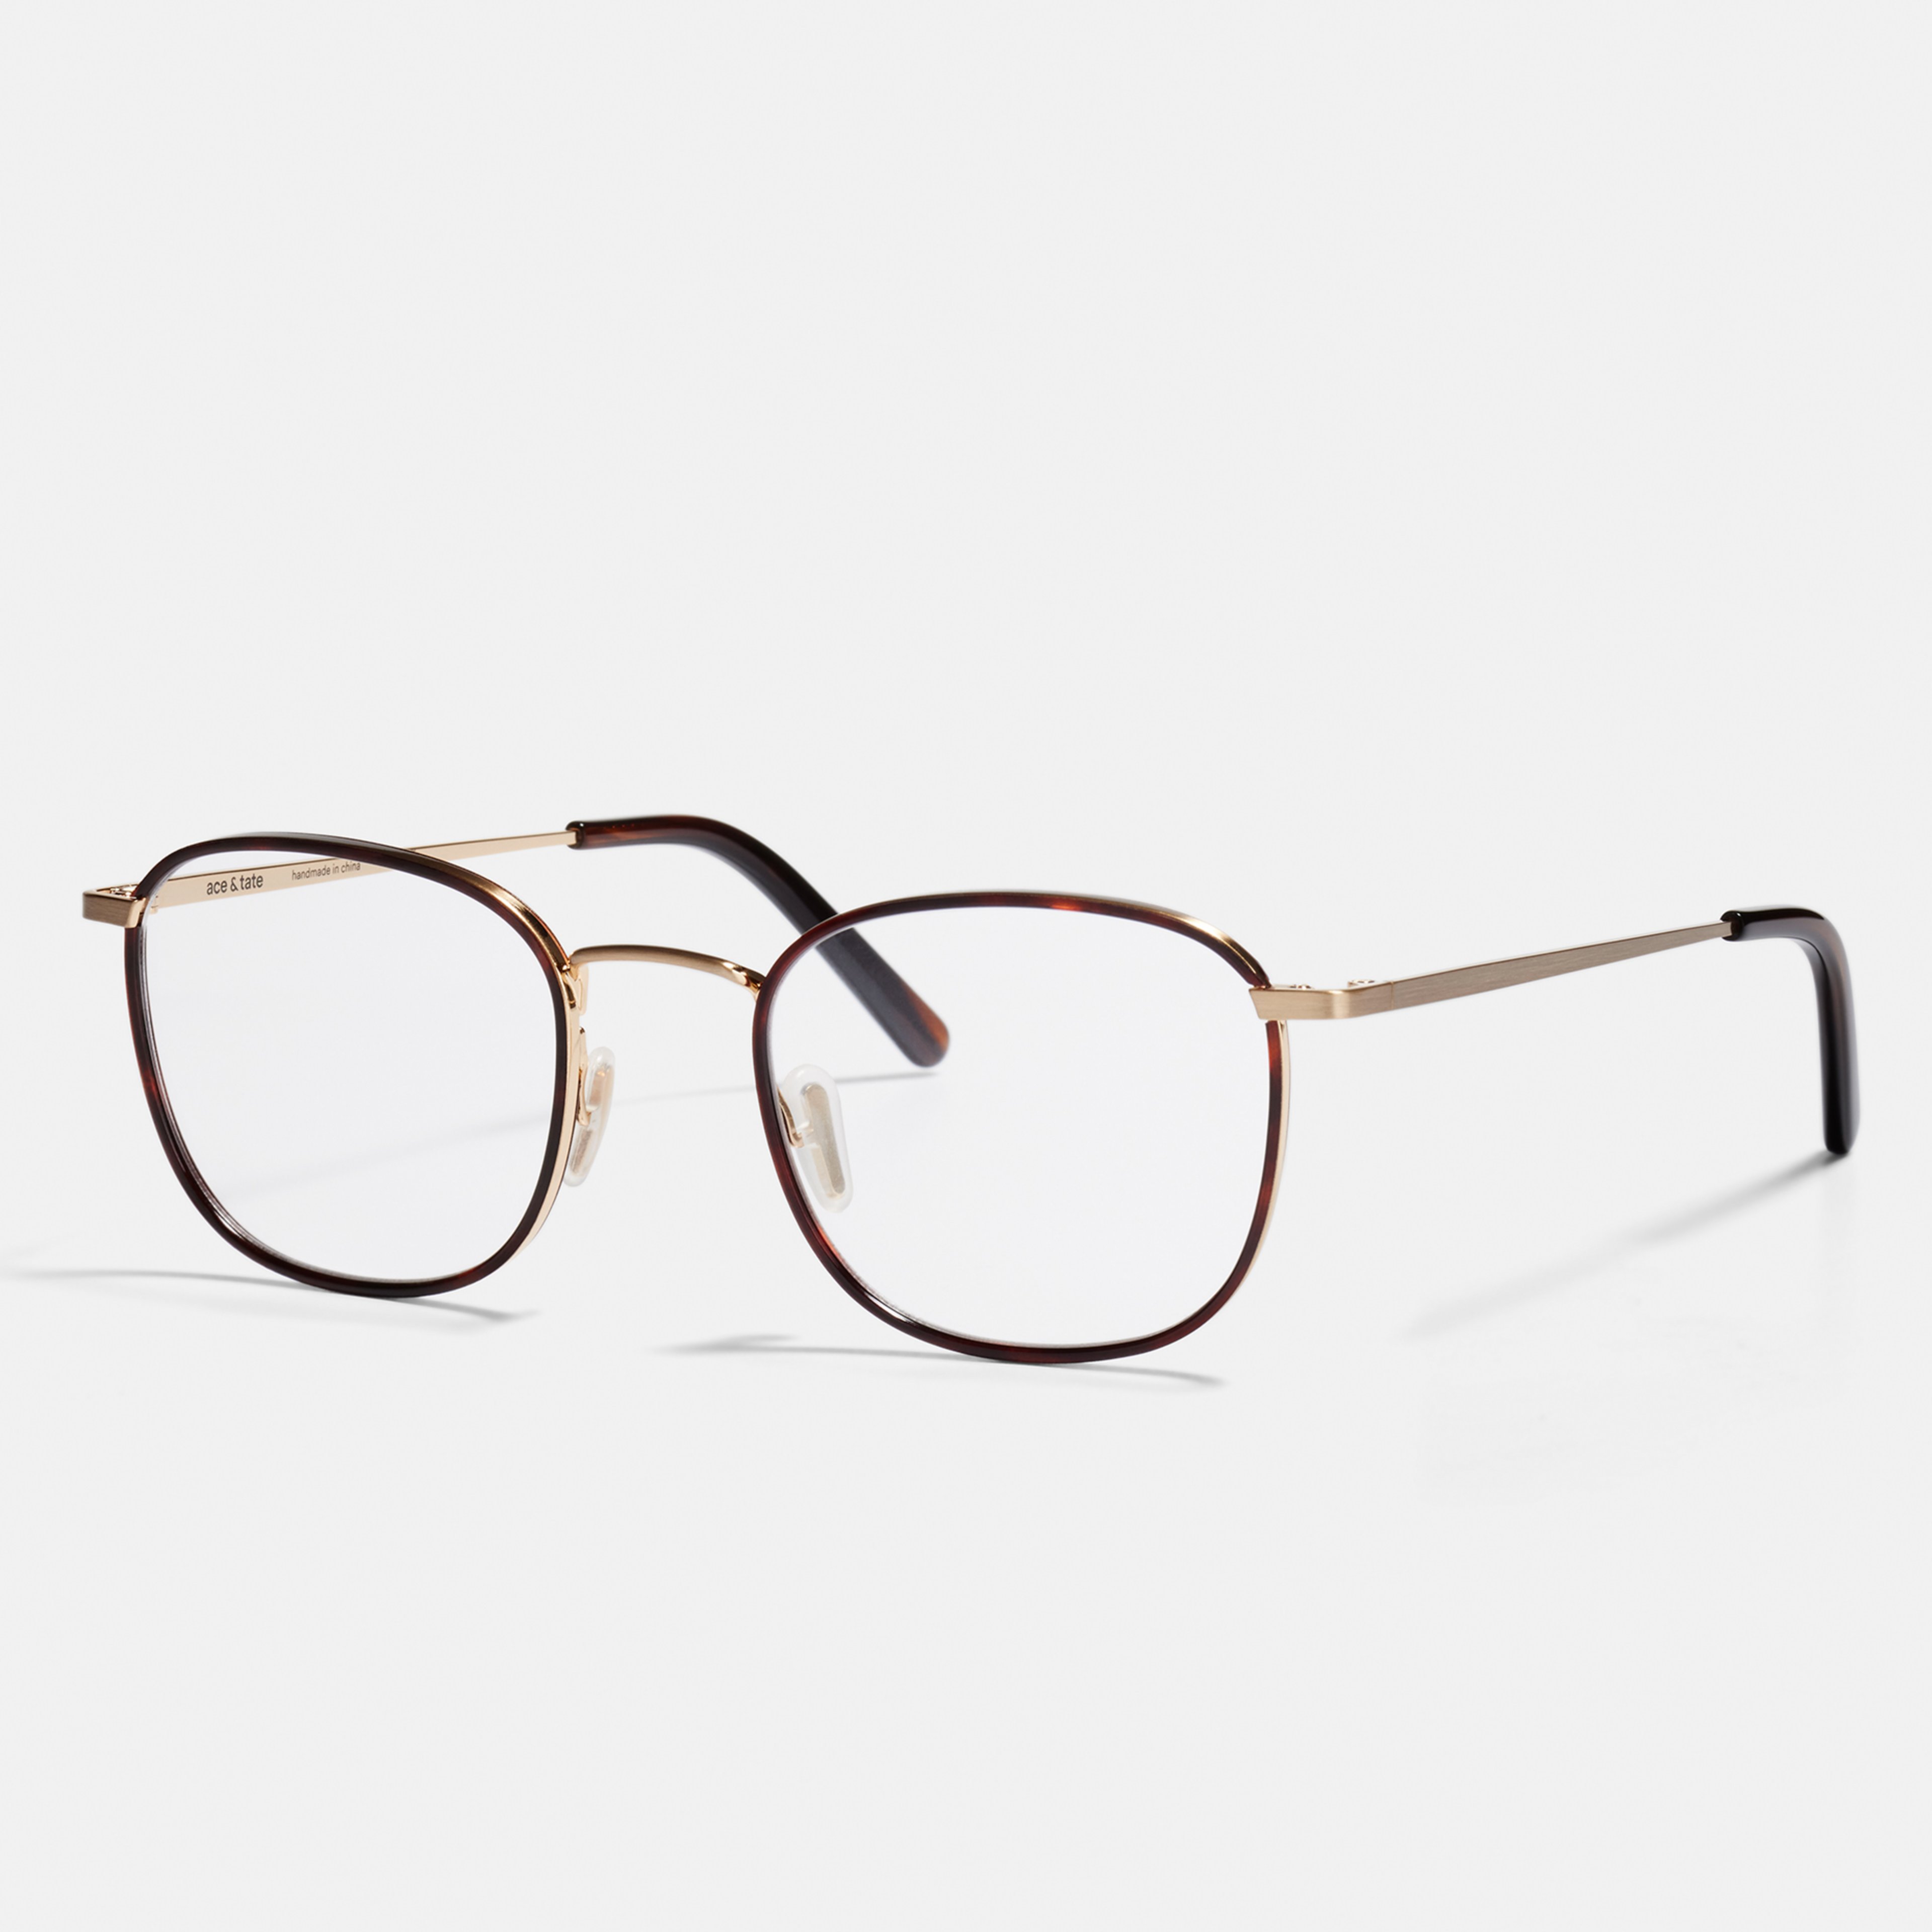 Ace & Tate Glasses | Square Acetate in Brown, Gold, Orange